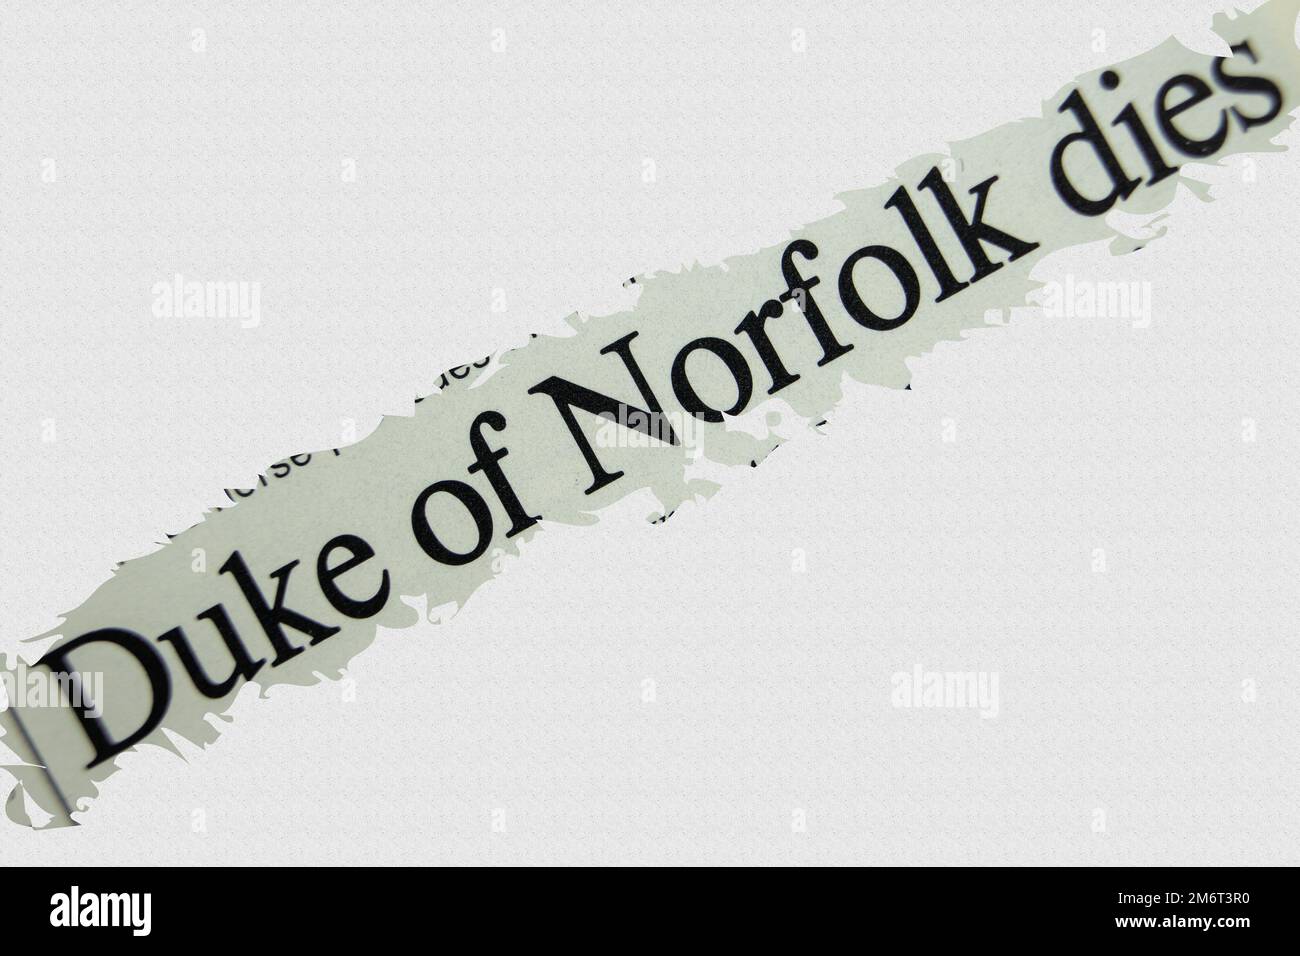 news story from 1975 newspaper headline article title - Duke of Norfolk dies Stock Photo